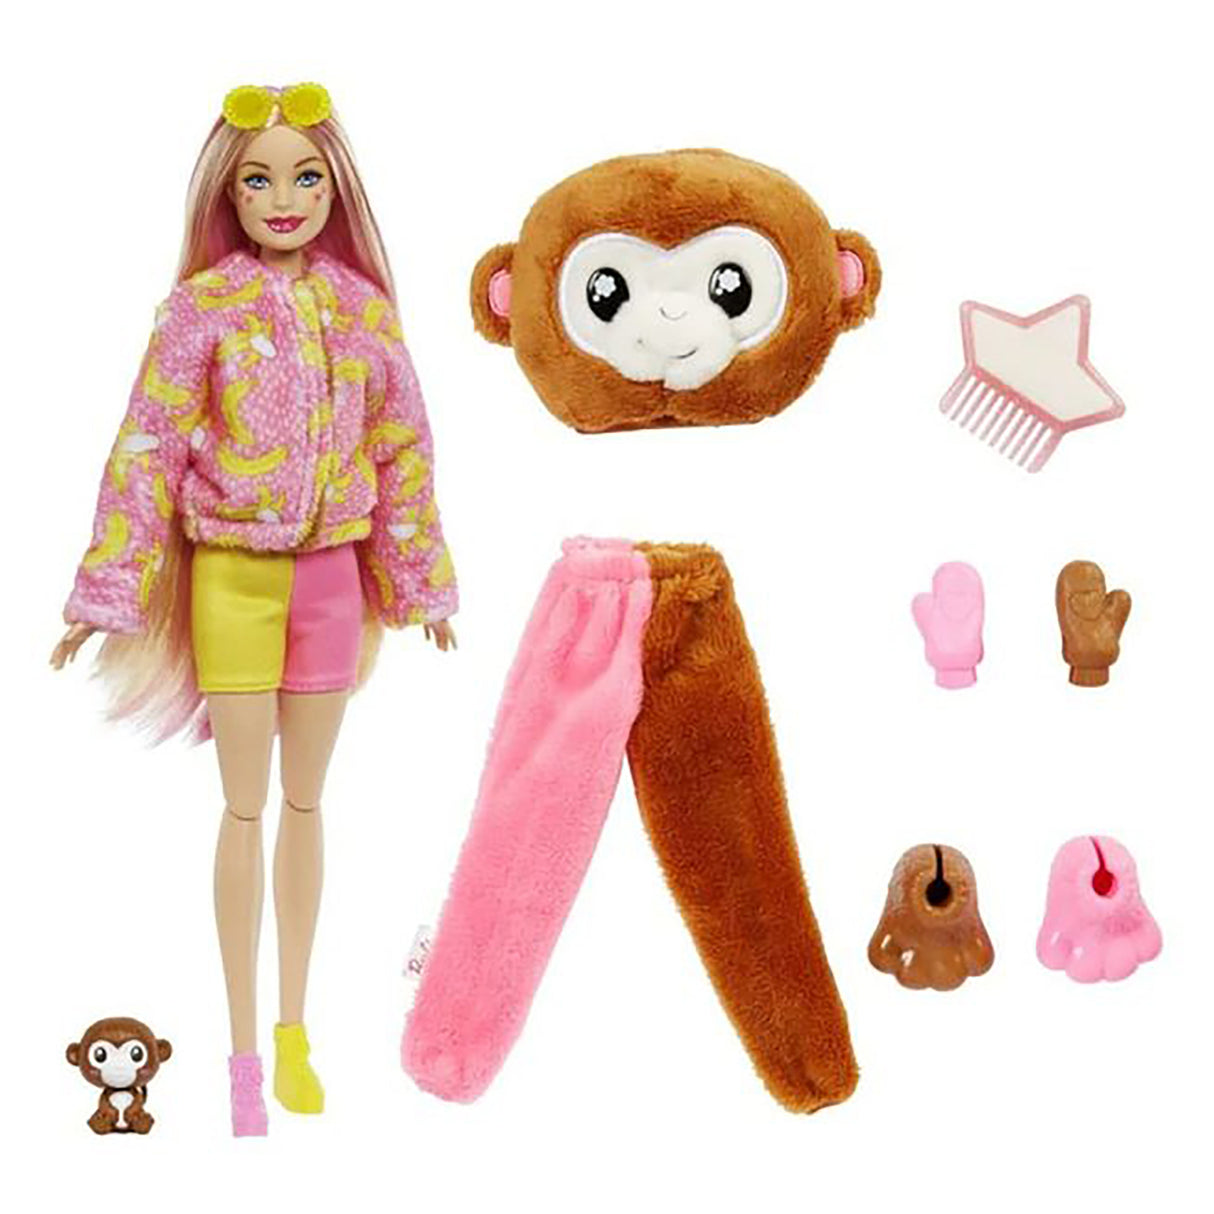 Barbie Cutie Reveal Jungle Series Monkey Doll